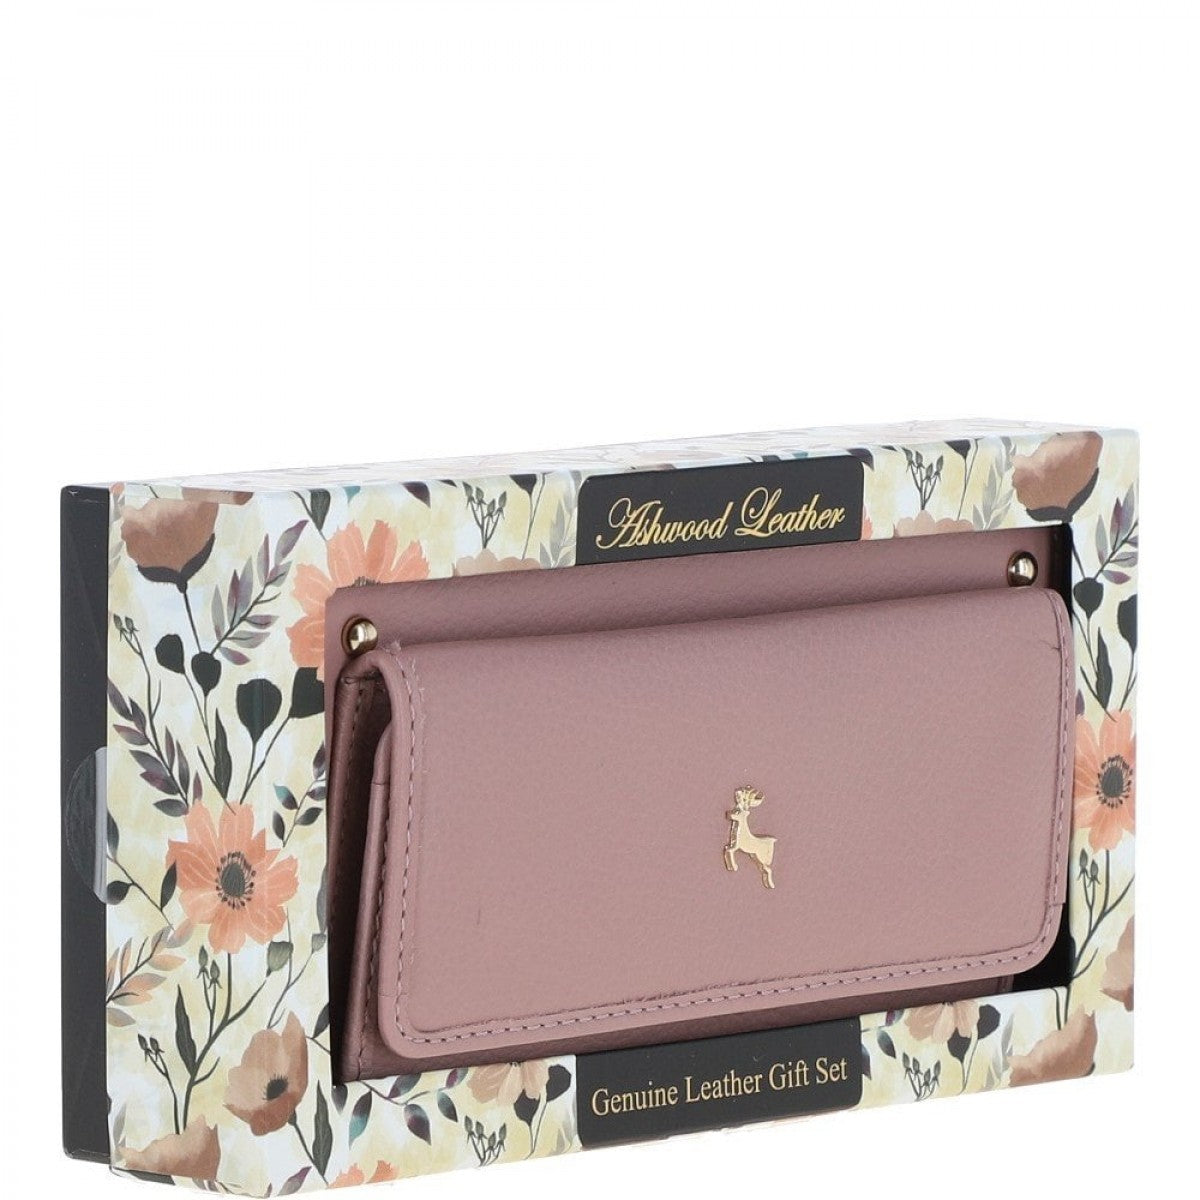 Жіночий гаманець клатч ASHWOOD J54 WOOD ROSE (Троянда)